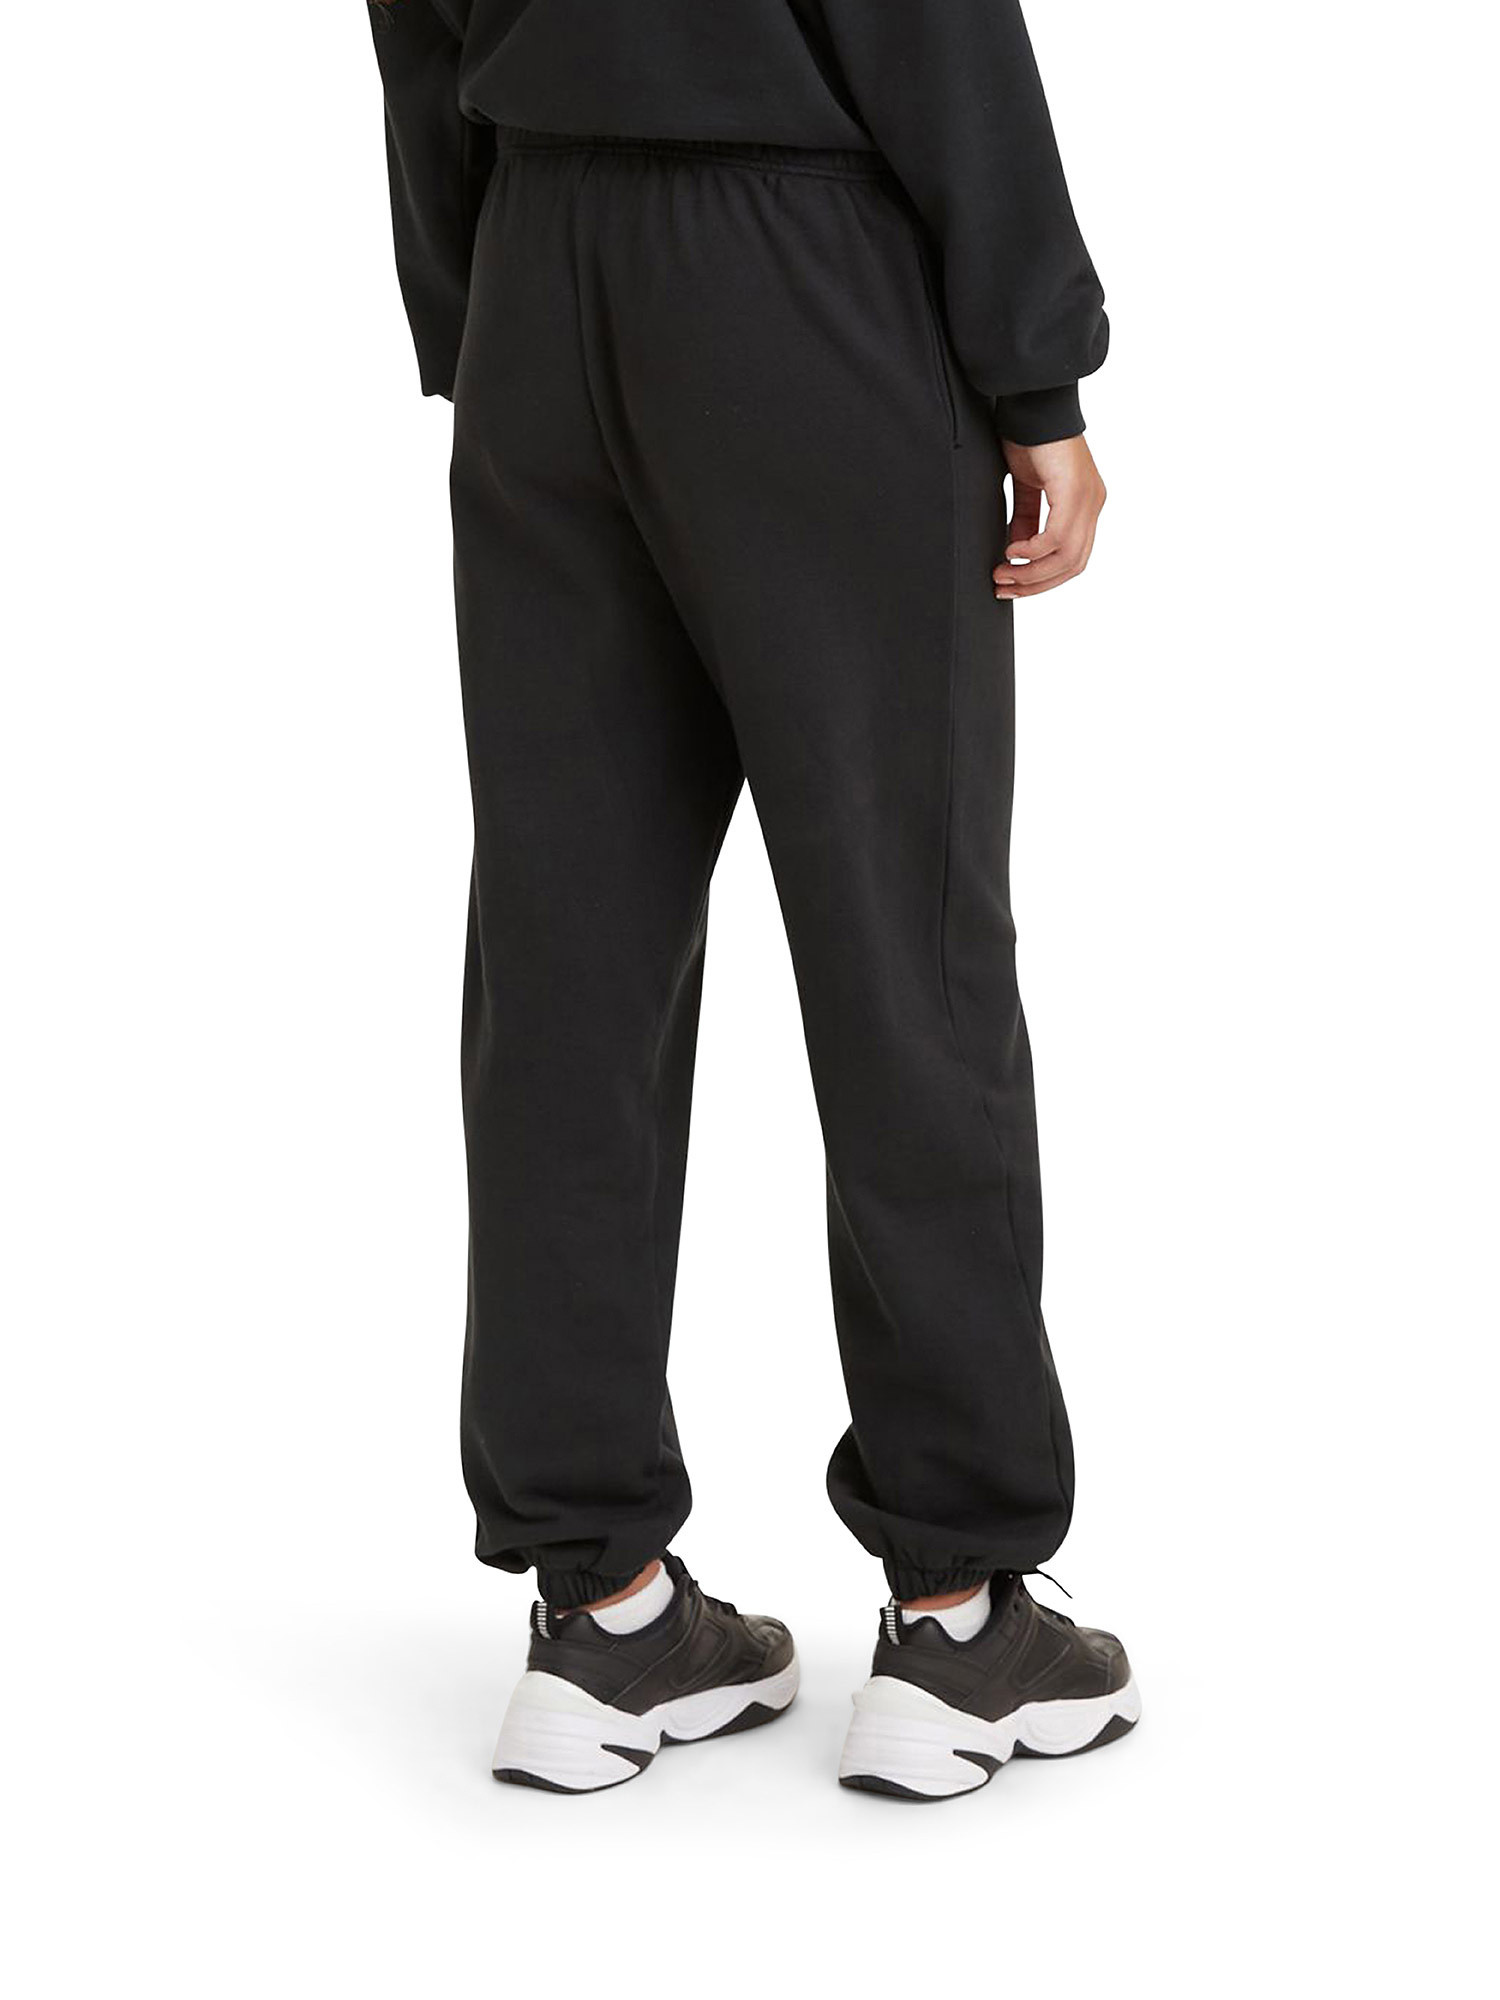 WFH Loungewear sweatpants, Black, large image number 3